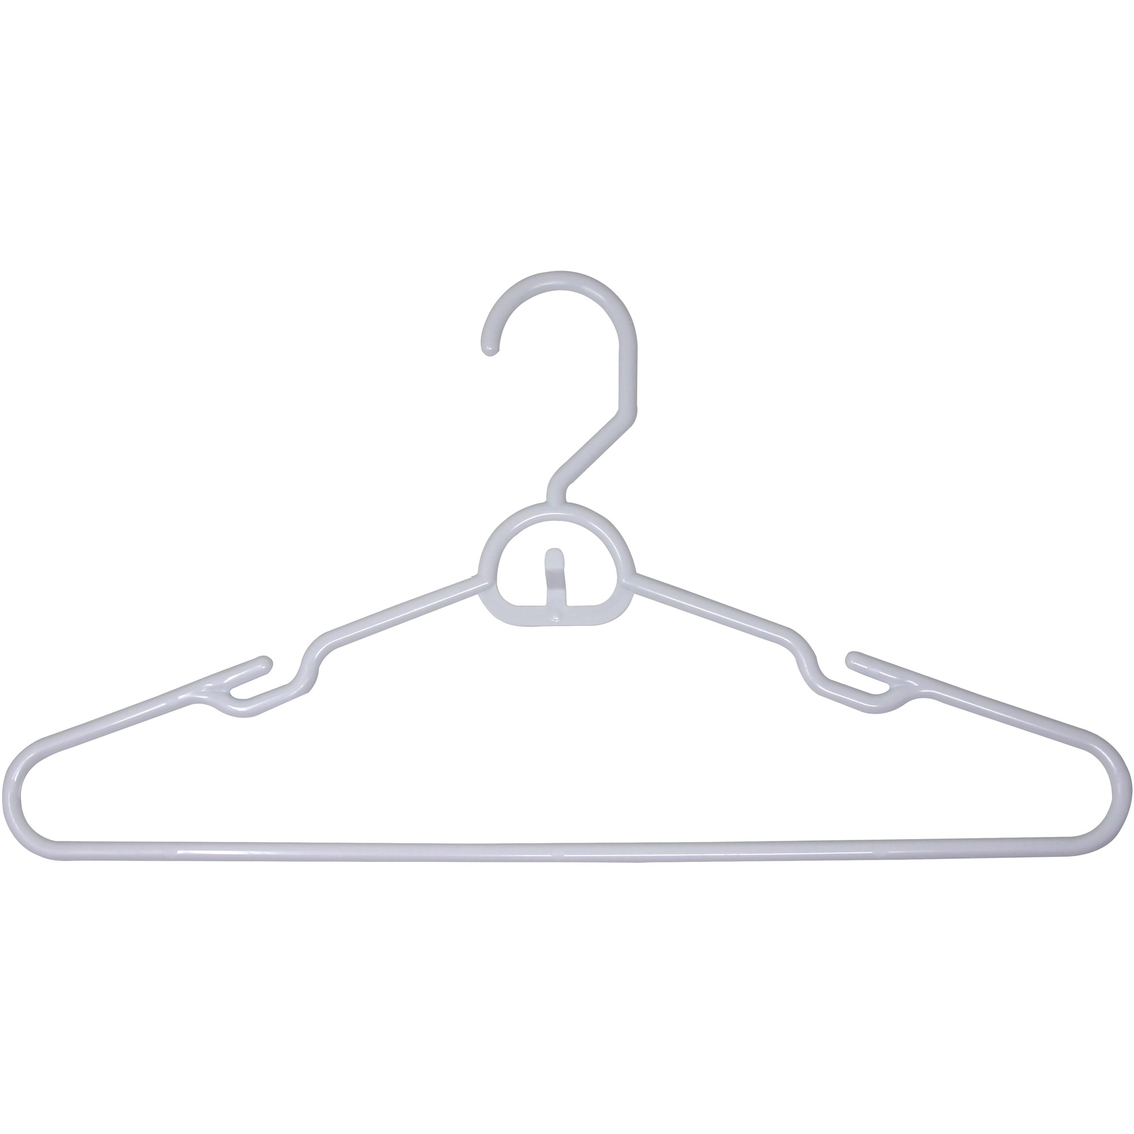 Merrick Attachable Hangers 6 Pk. - Image 2 of 3